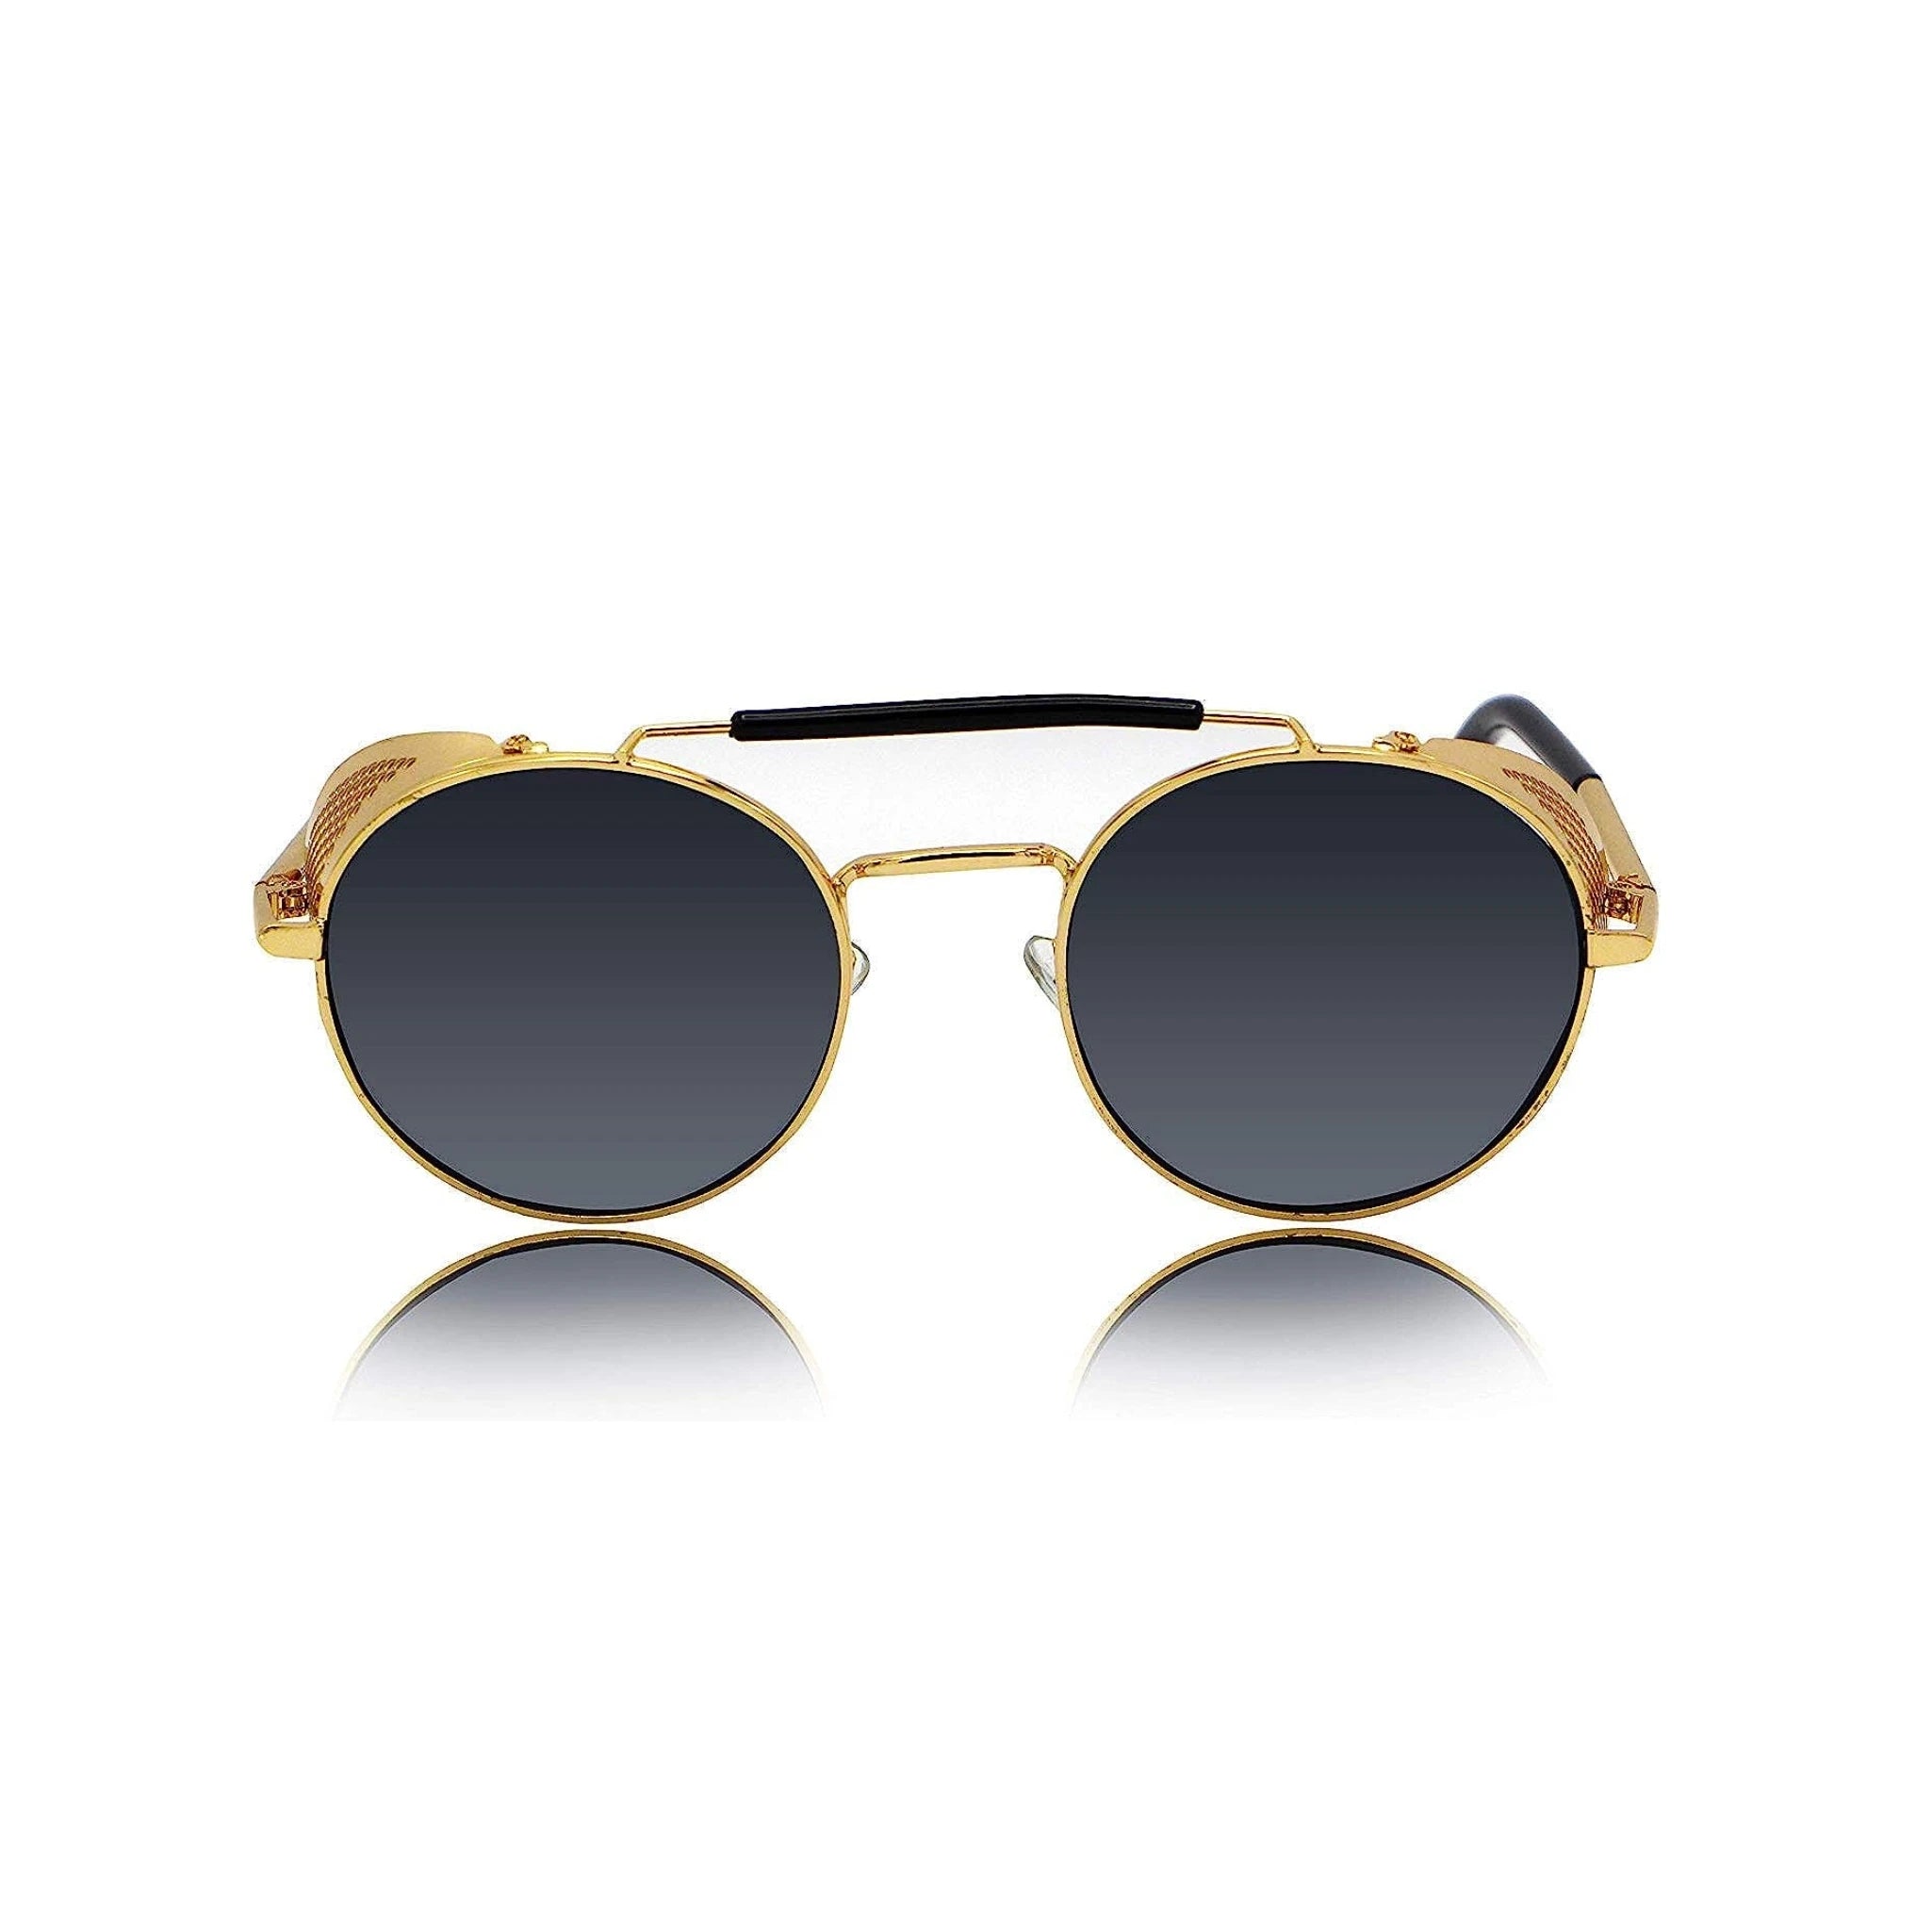 DISC Series Steampunk Side Shield Round Sunglasses - Gold Black